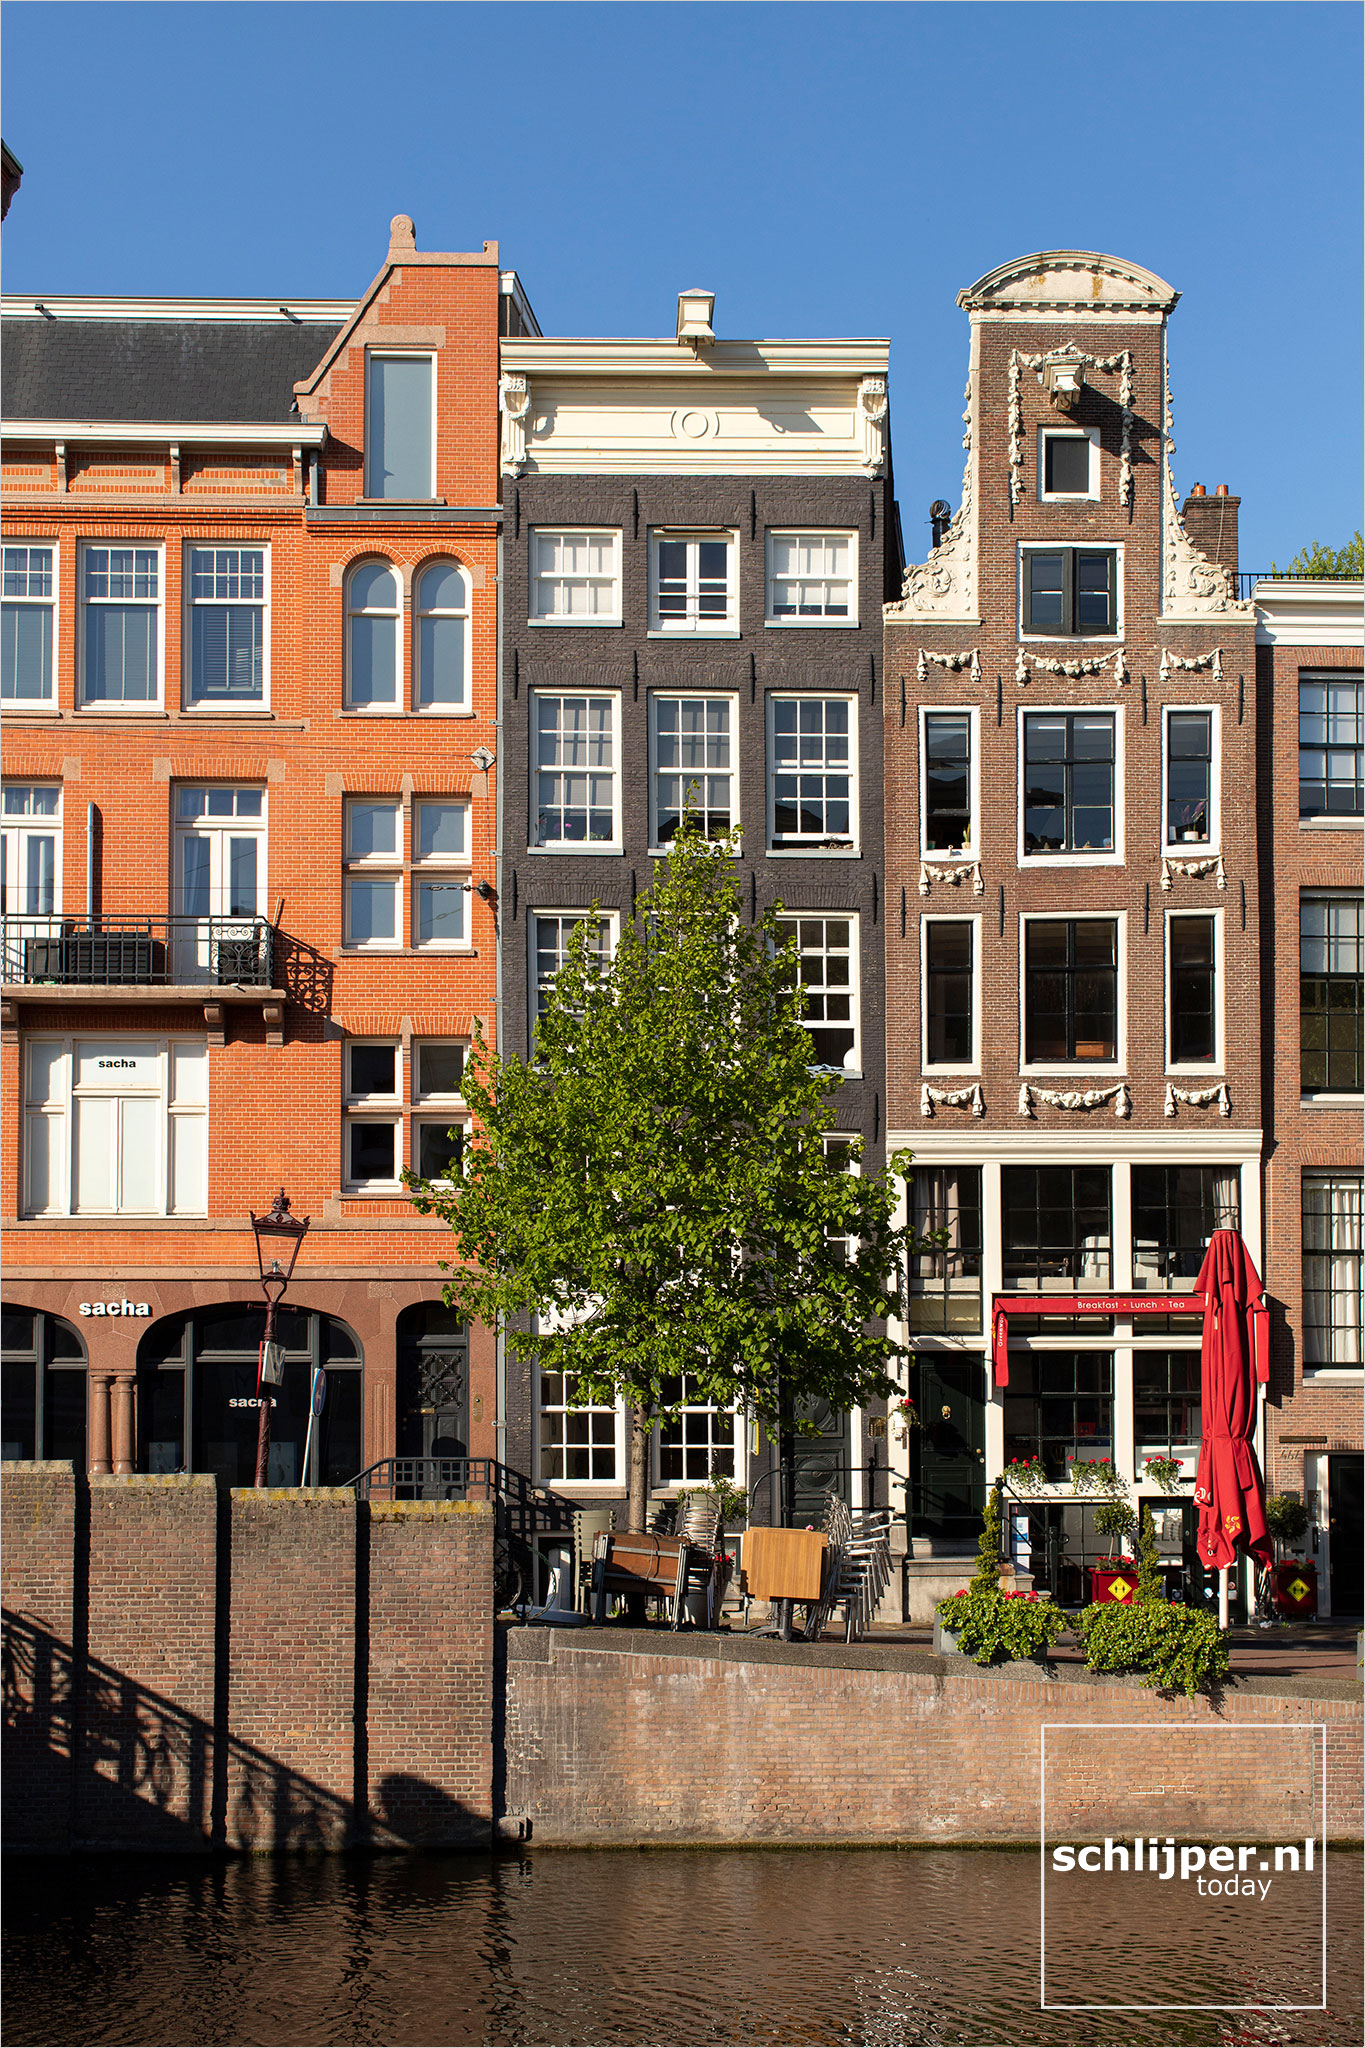 The Netherlands, Amsterdam, 18 mei 2021